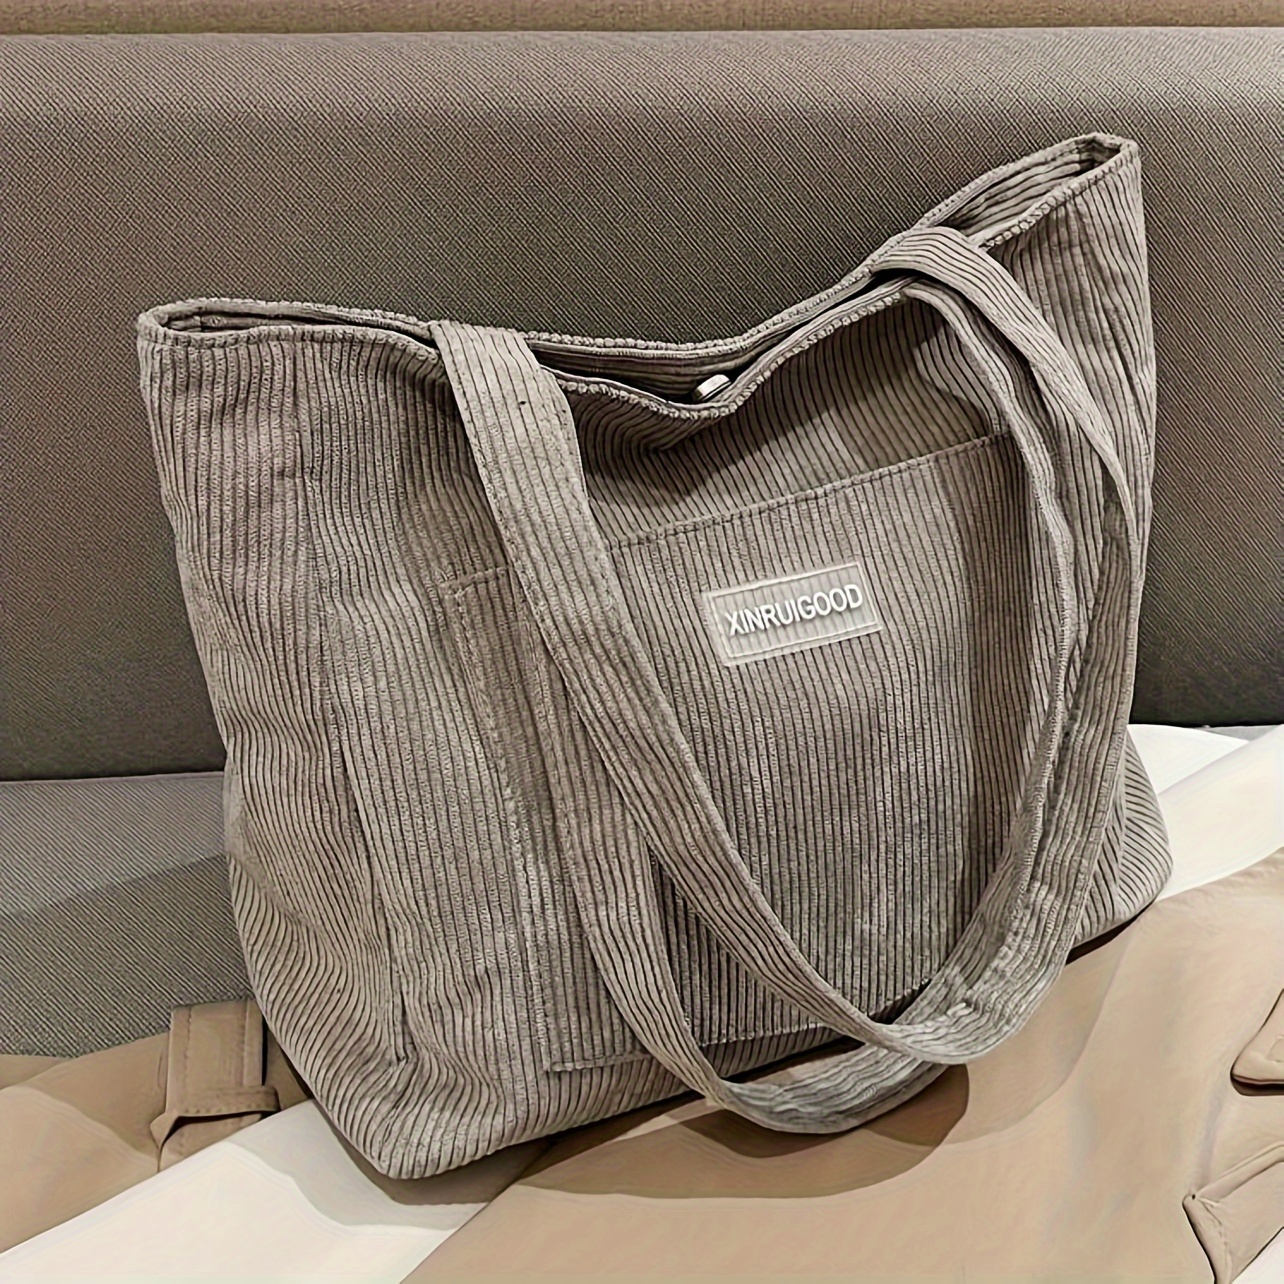 

Solid Color Tote Bag, Trendy Shoulder Bag, All-match Corduroy Handbag, Women's Classic Purse